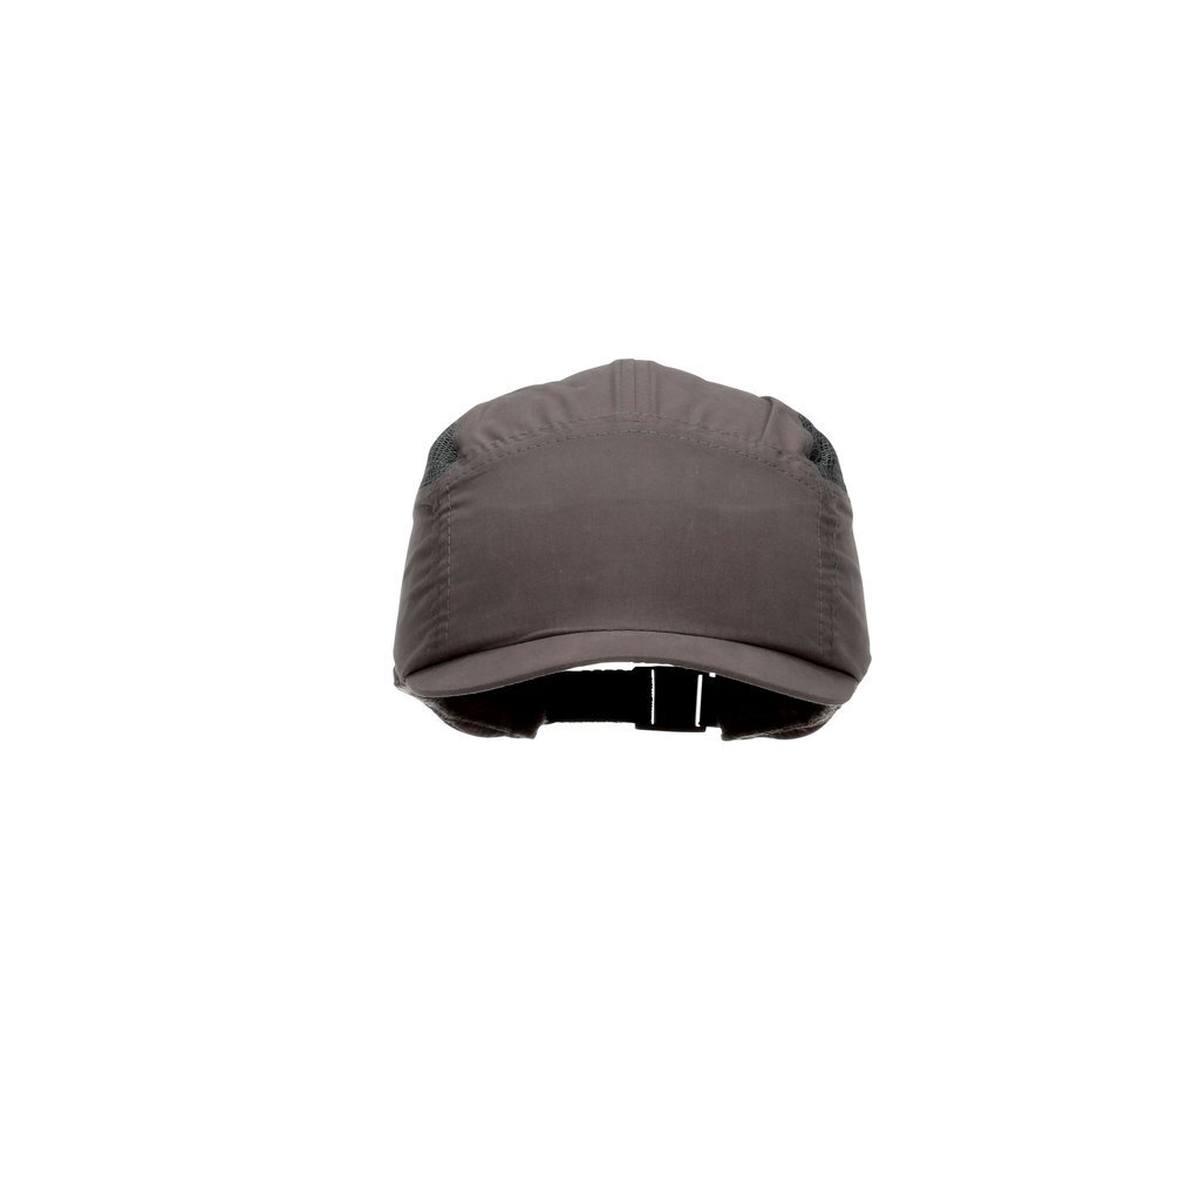 3M First Base Plus - Bump cap in grey - micro visor 25 mm, EN812